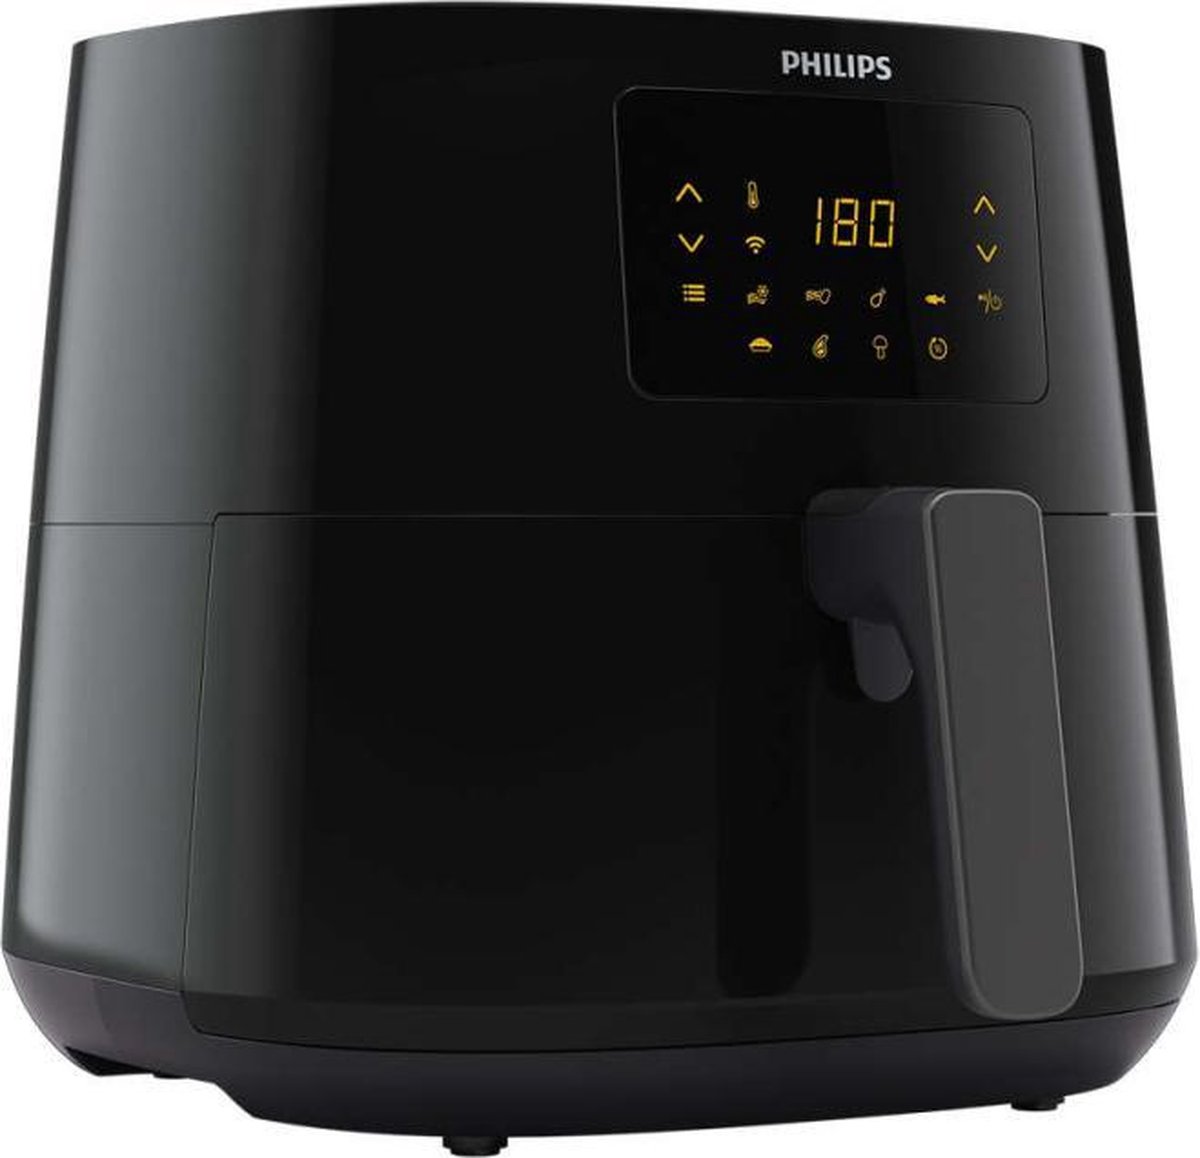 Philips 1,2 kg, 6,2 l, zwart, Airfryer XL bol.com